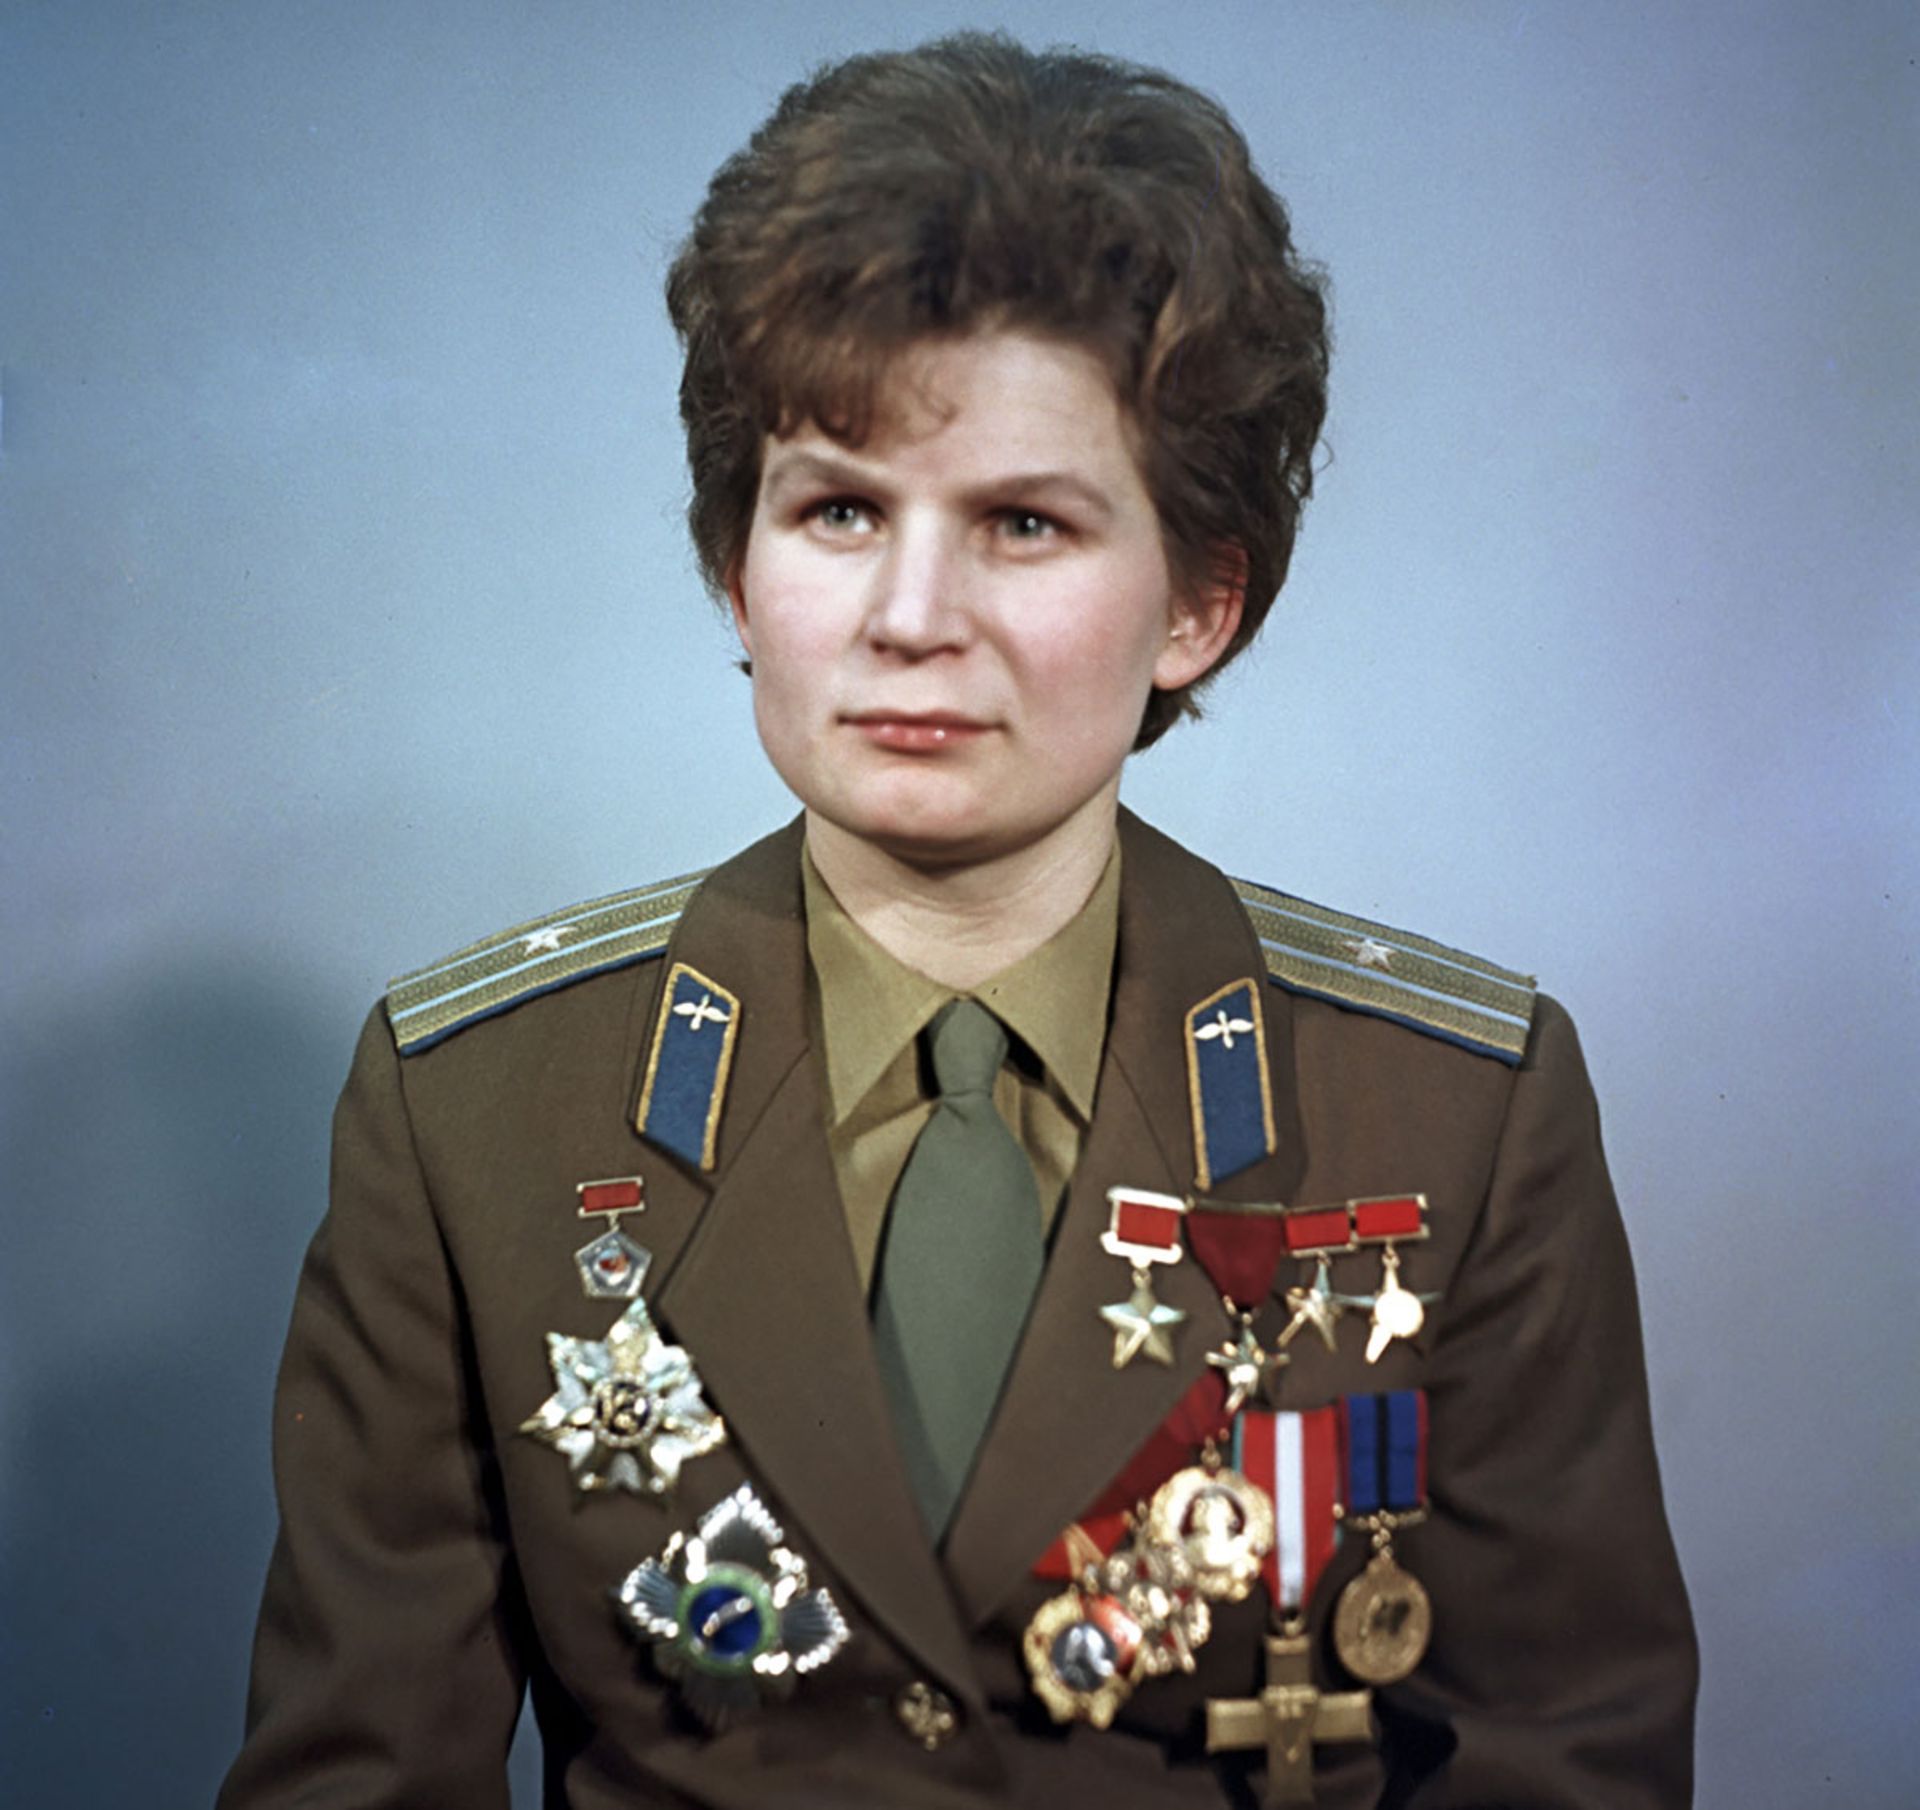 مرجع متخصصين ايران والنتينا ترشكوا / Valentina Tereshkova